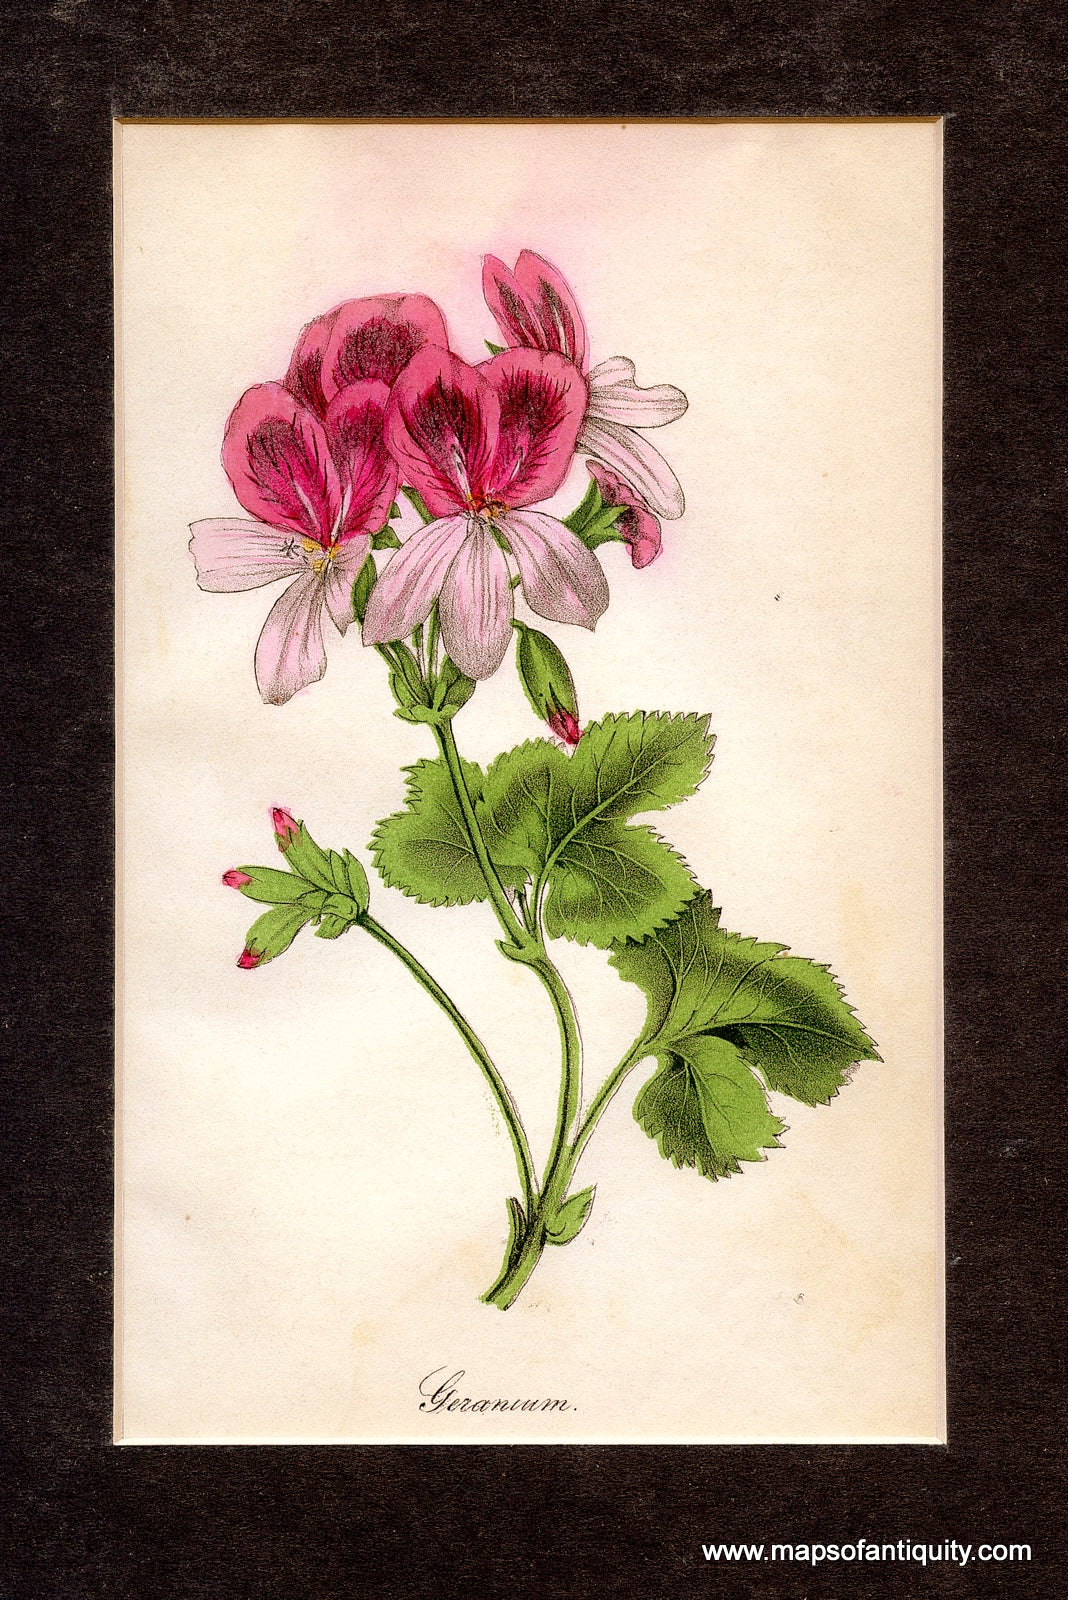 Hand-Colored-Antique-Illustration-Geranium.**********-Natural-History-Botanical-1848-The-Ladies-Wreath-Maps-Of-Antiquity